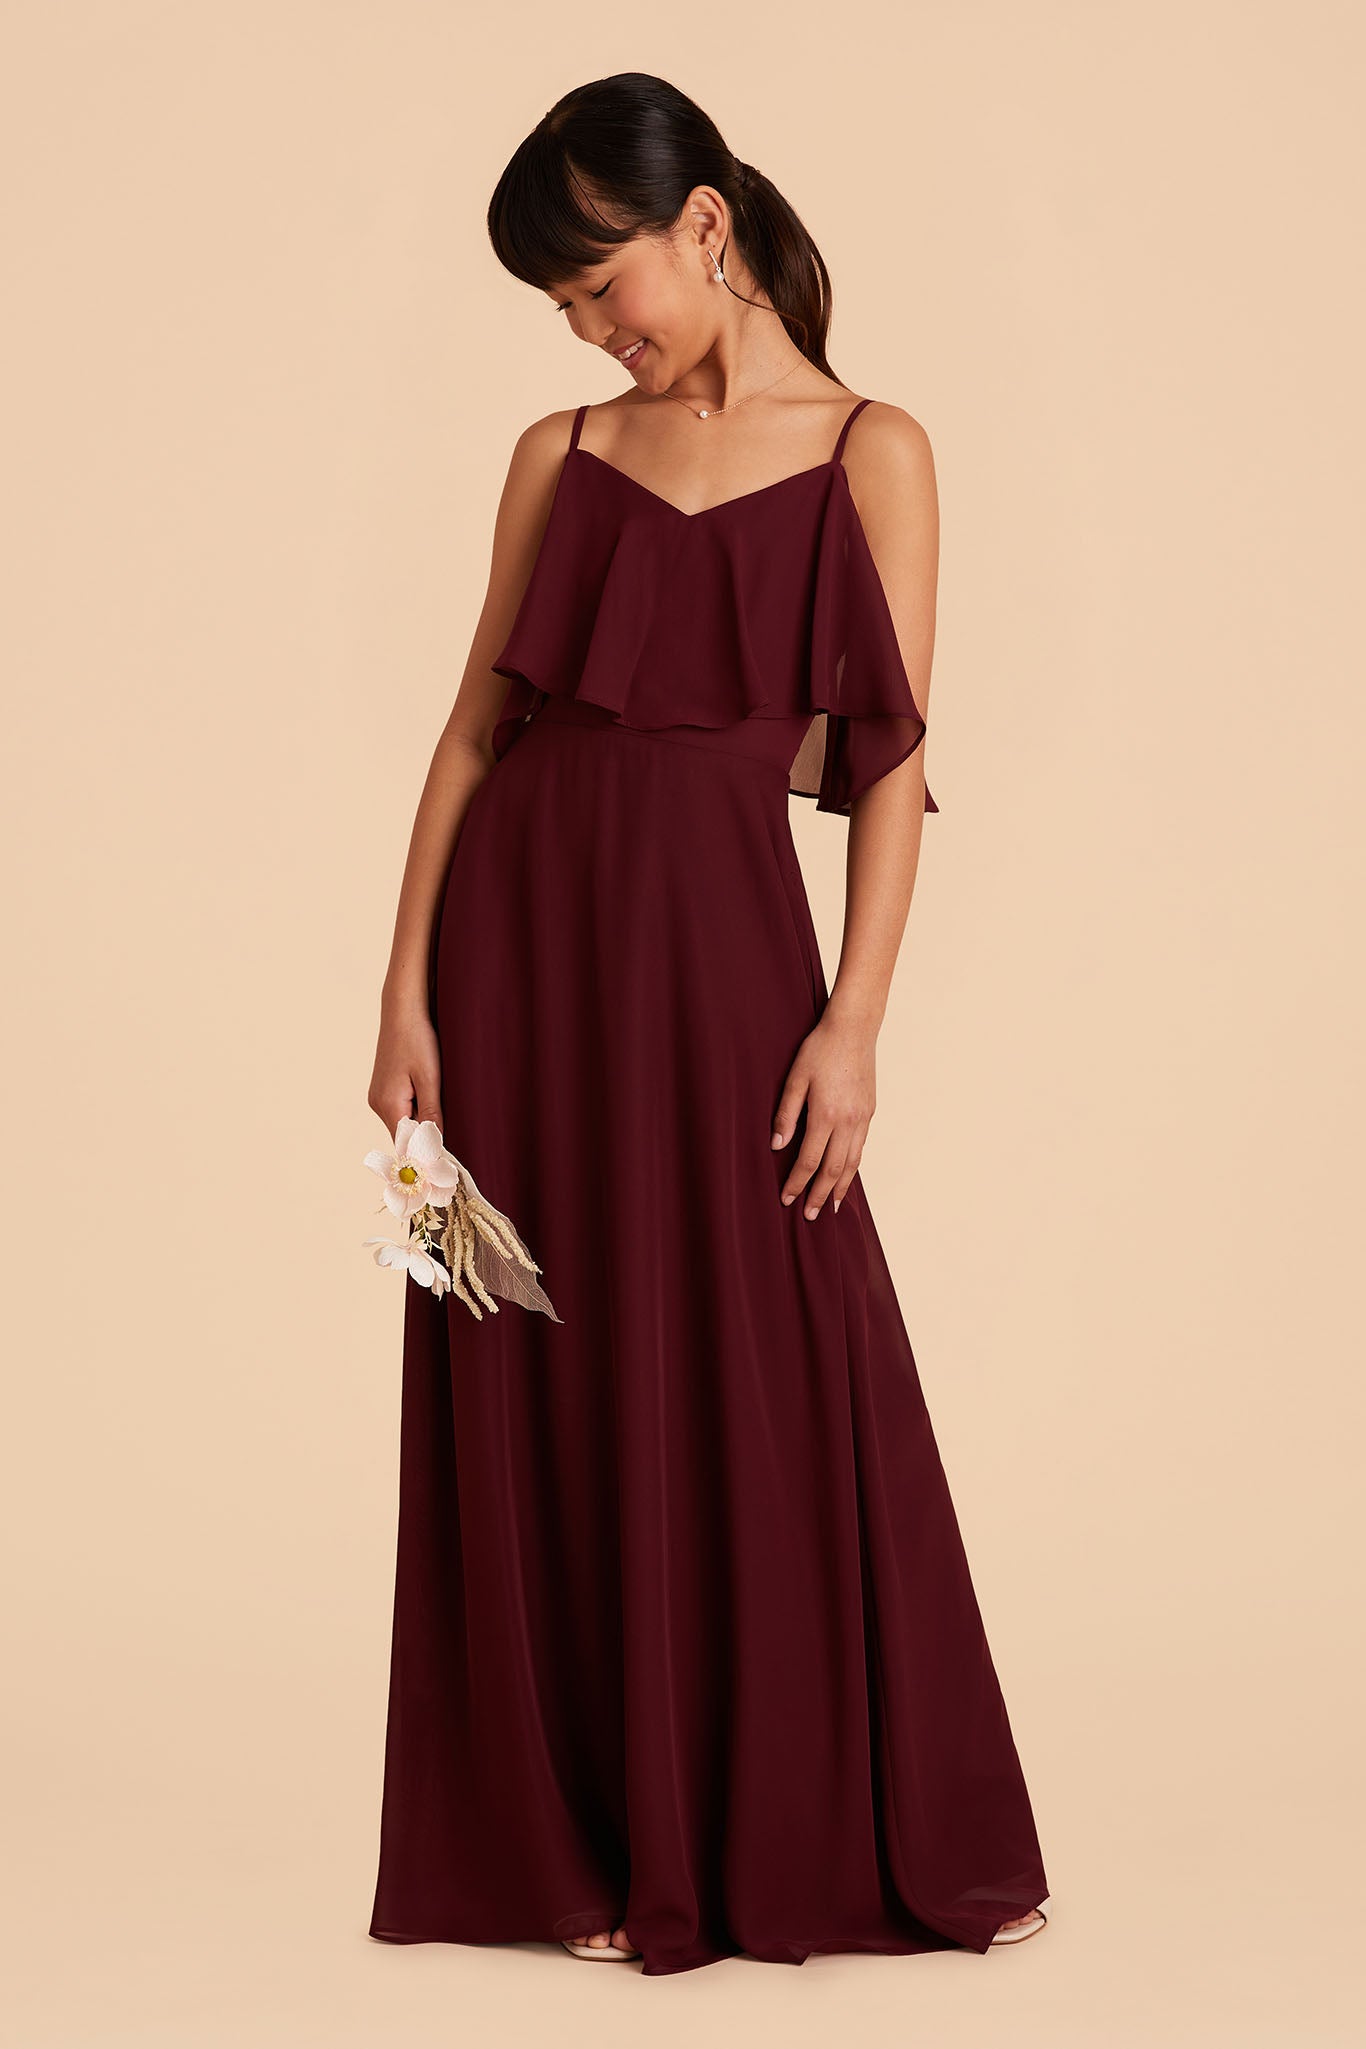 floor length sleeveless cabernet dark red convertible junior bridesmaid dress spaghetti strap with ruffles